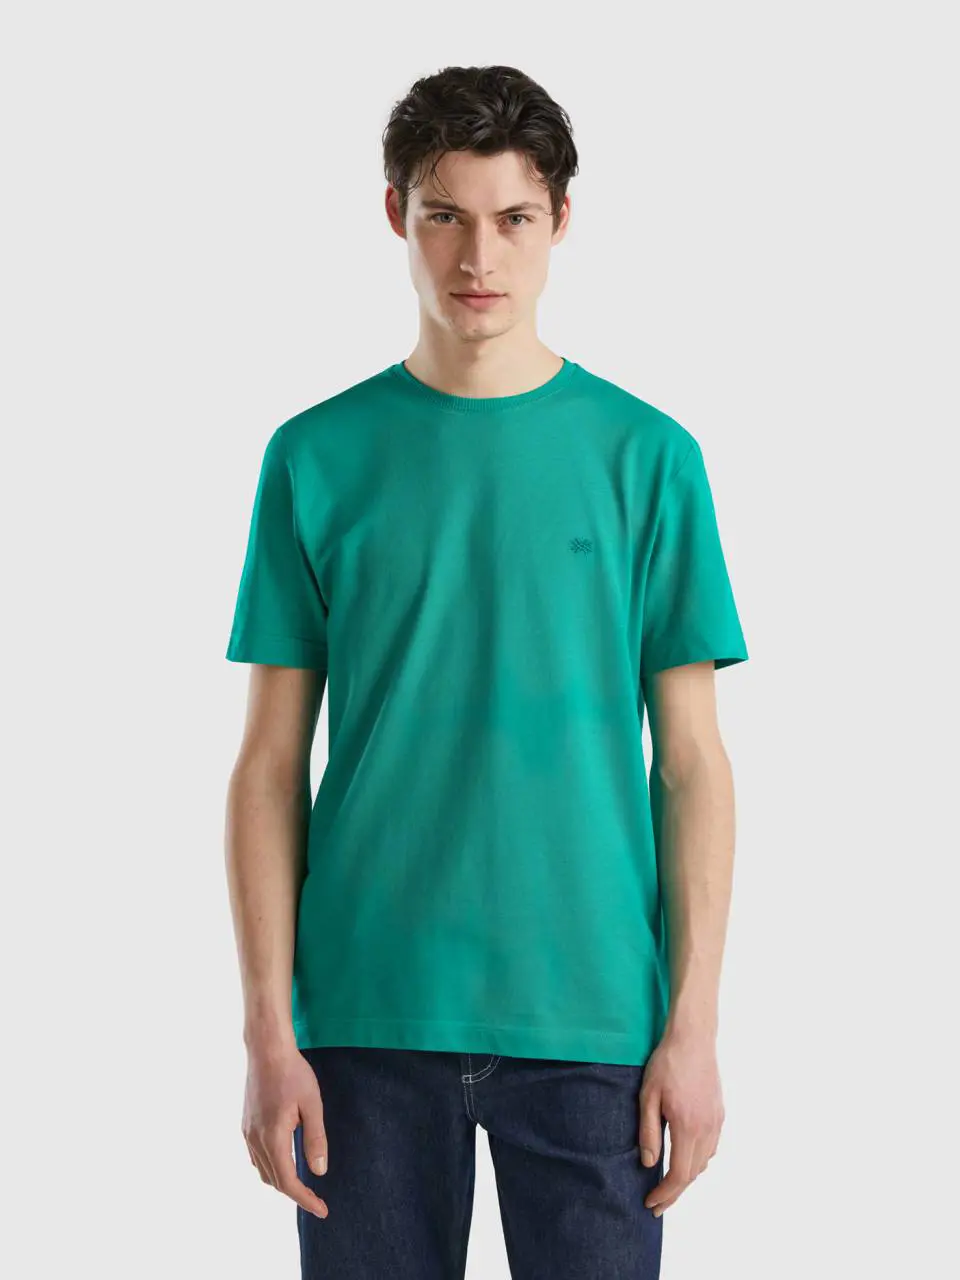 Benetton t-shirt in organic cotton. 1